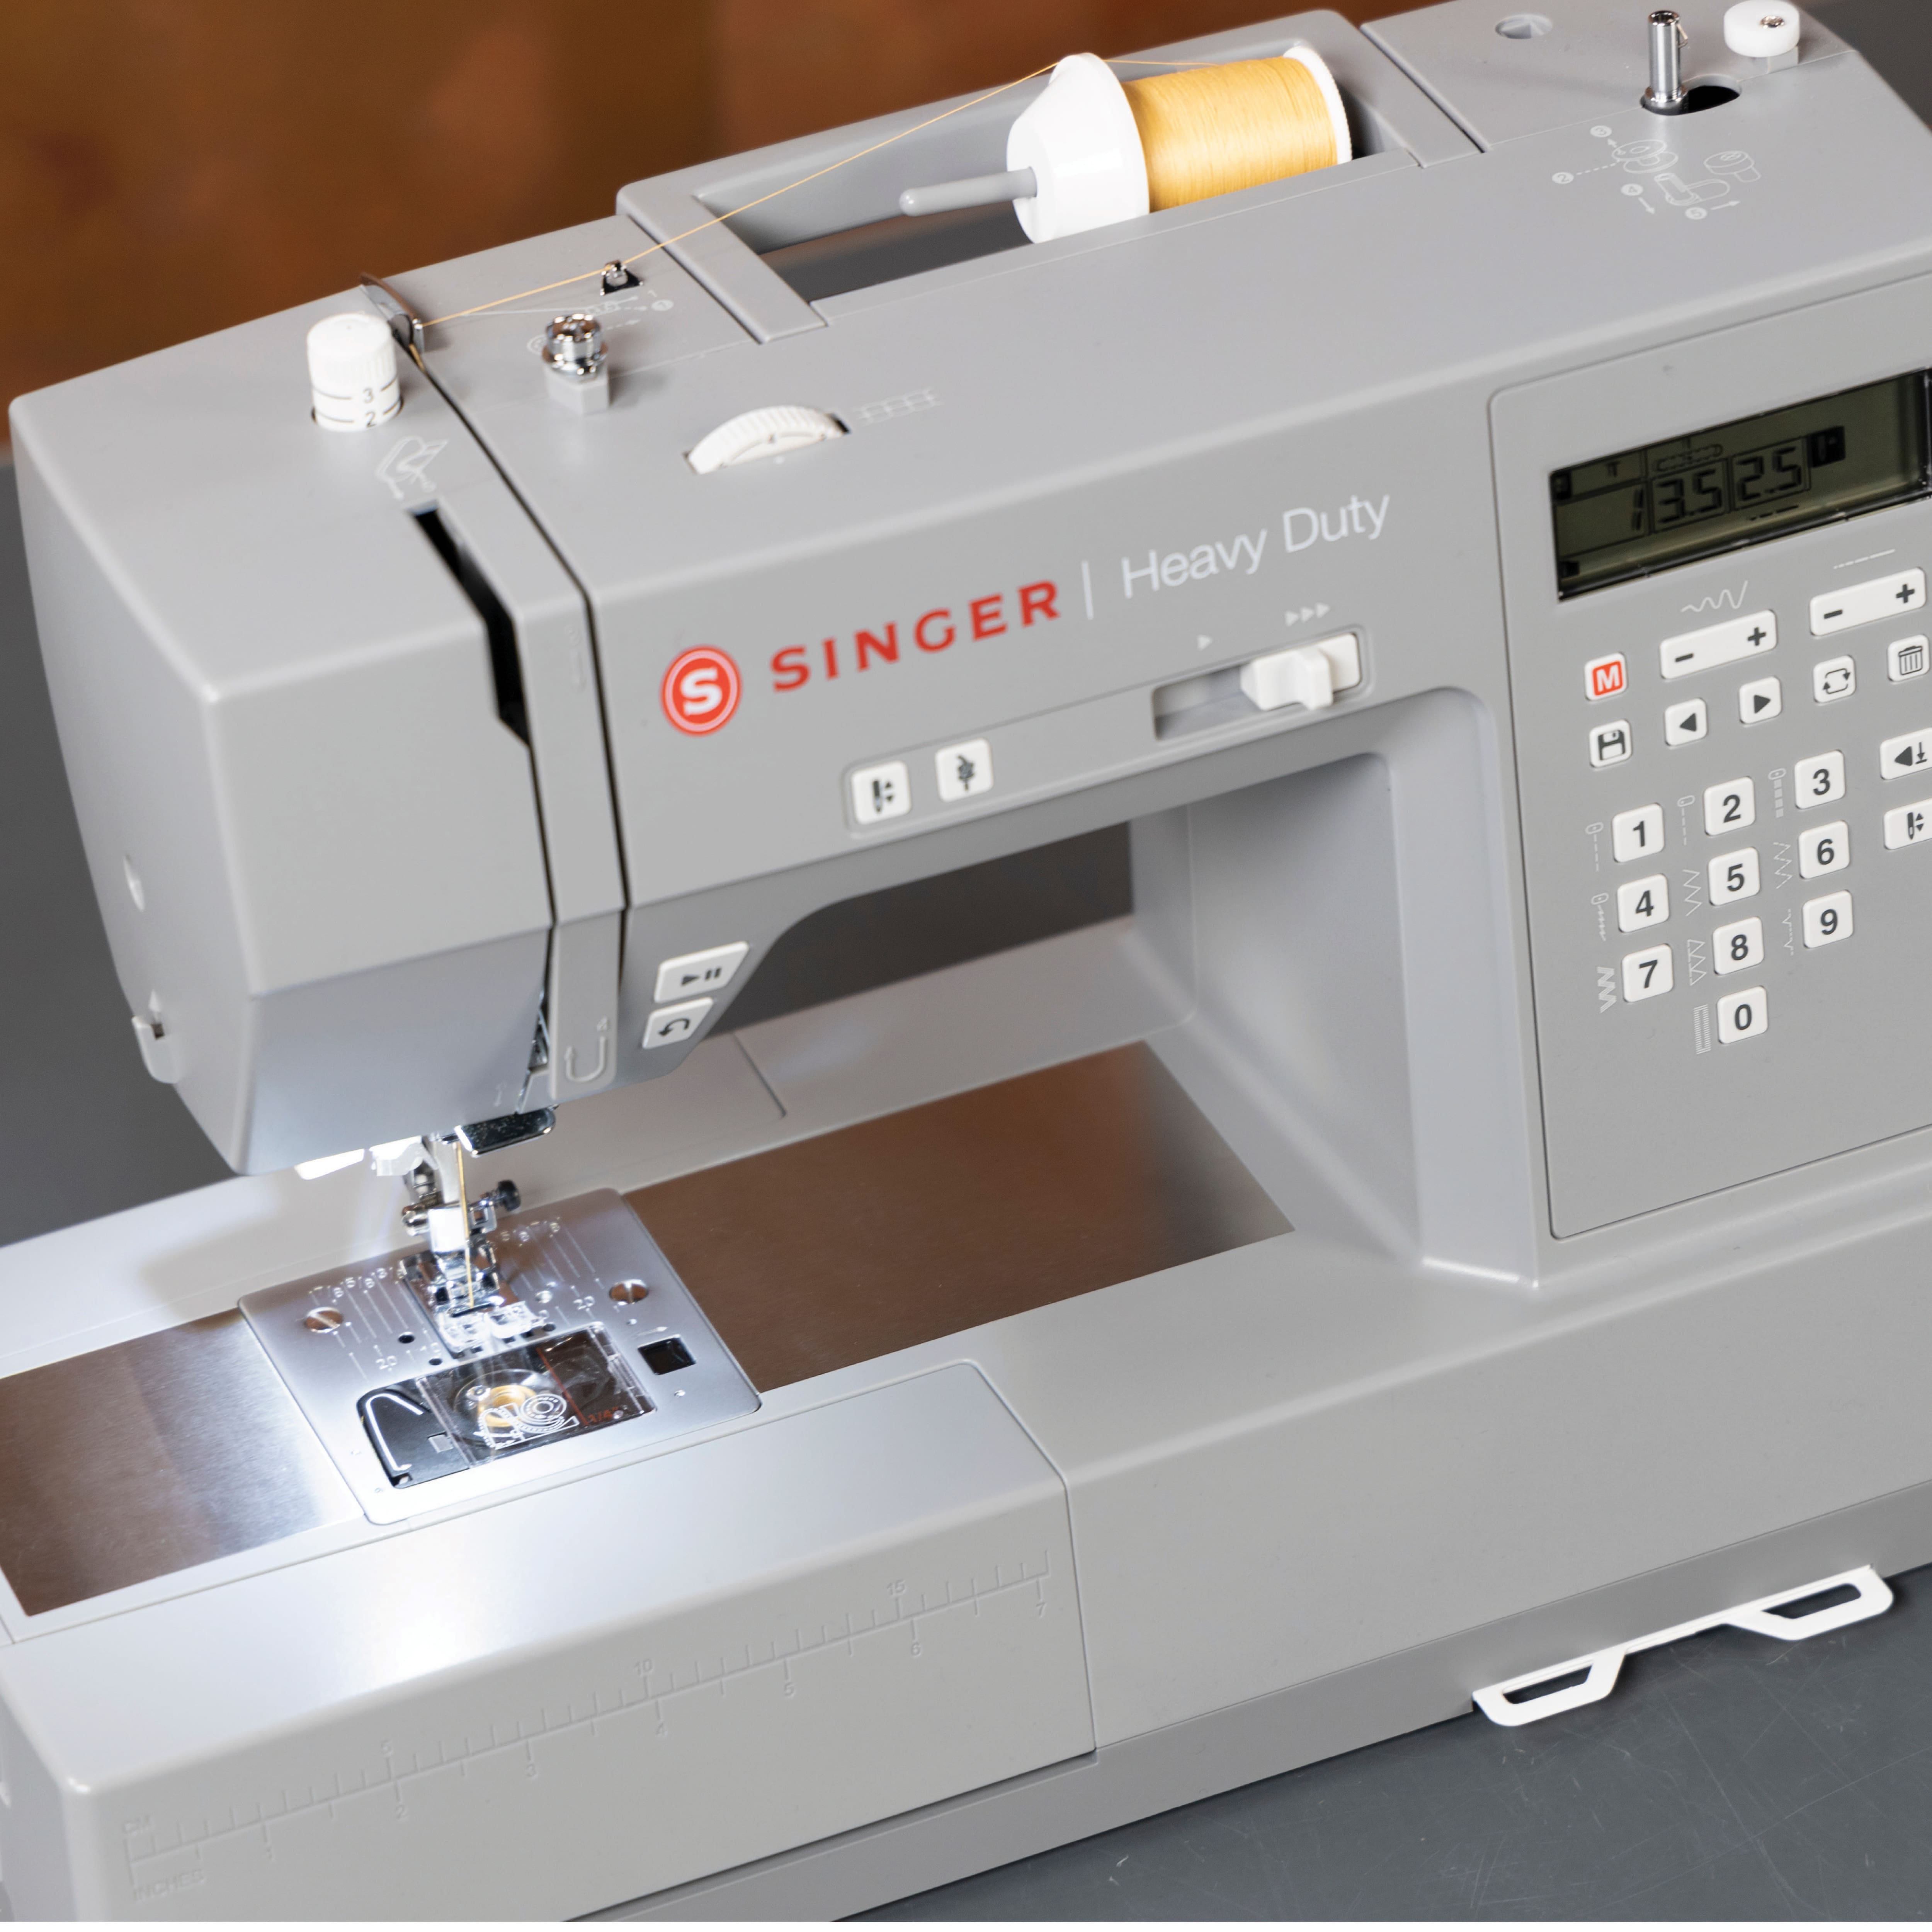 SINGER® HD6700C Heavy Duty Sewing Machine